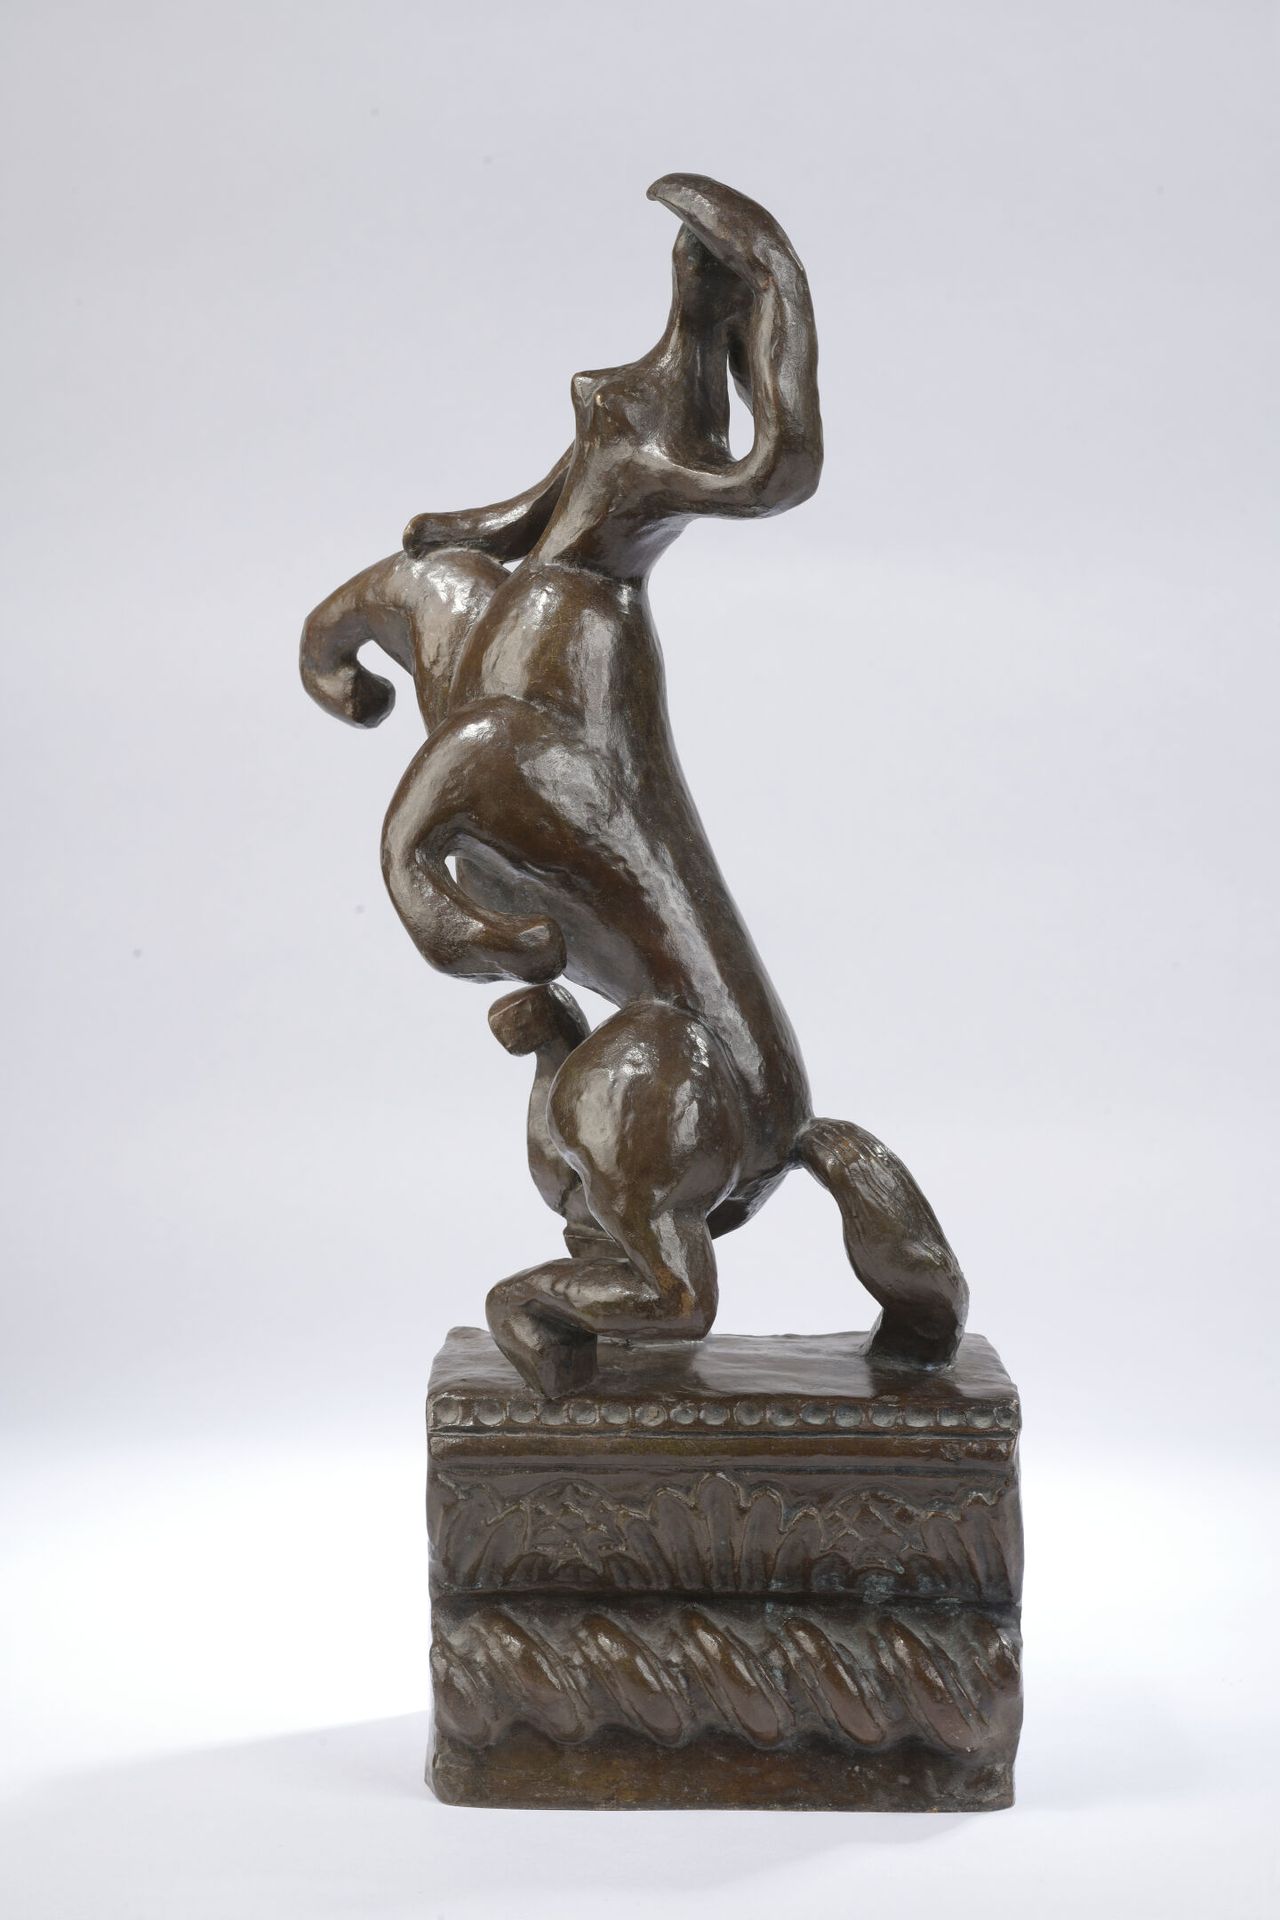 Null Henri LAURENS (1885-1954)

半人马座》，1953年

带有棕色铜锈的铜版画，背面有文字说明和0/6字样。

H.40.5 c&hellip;